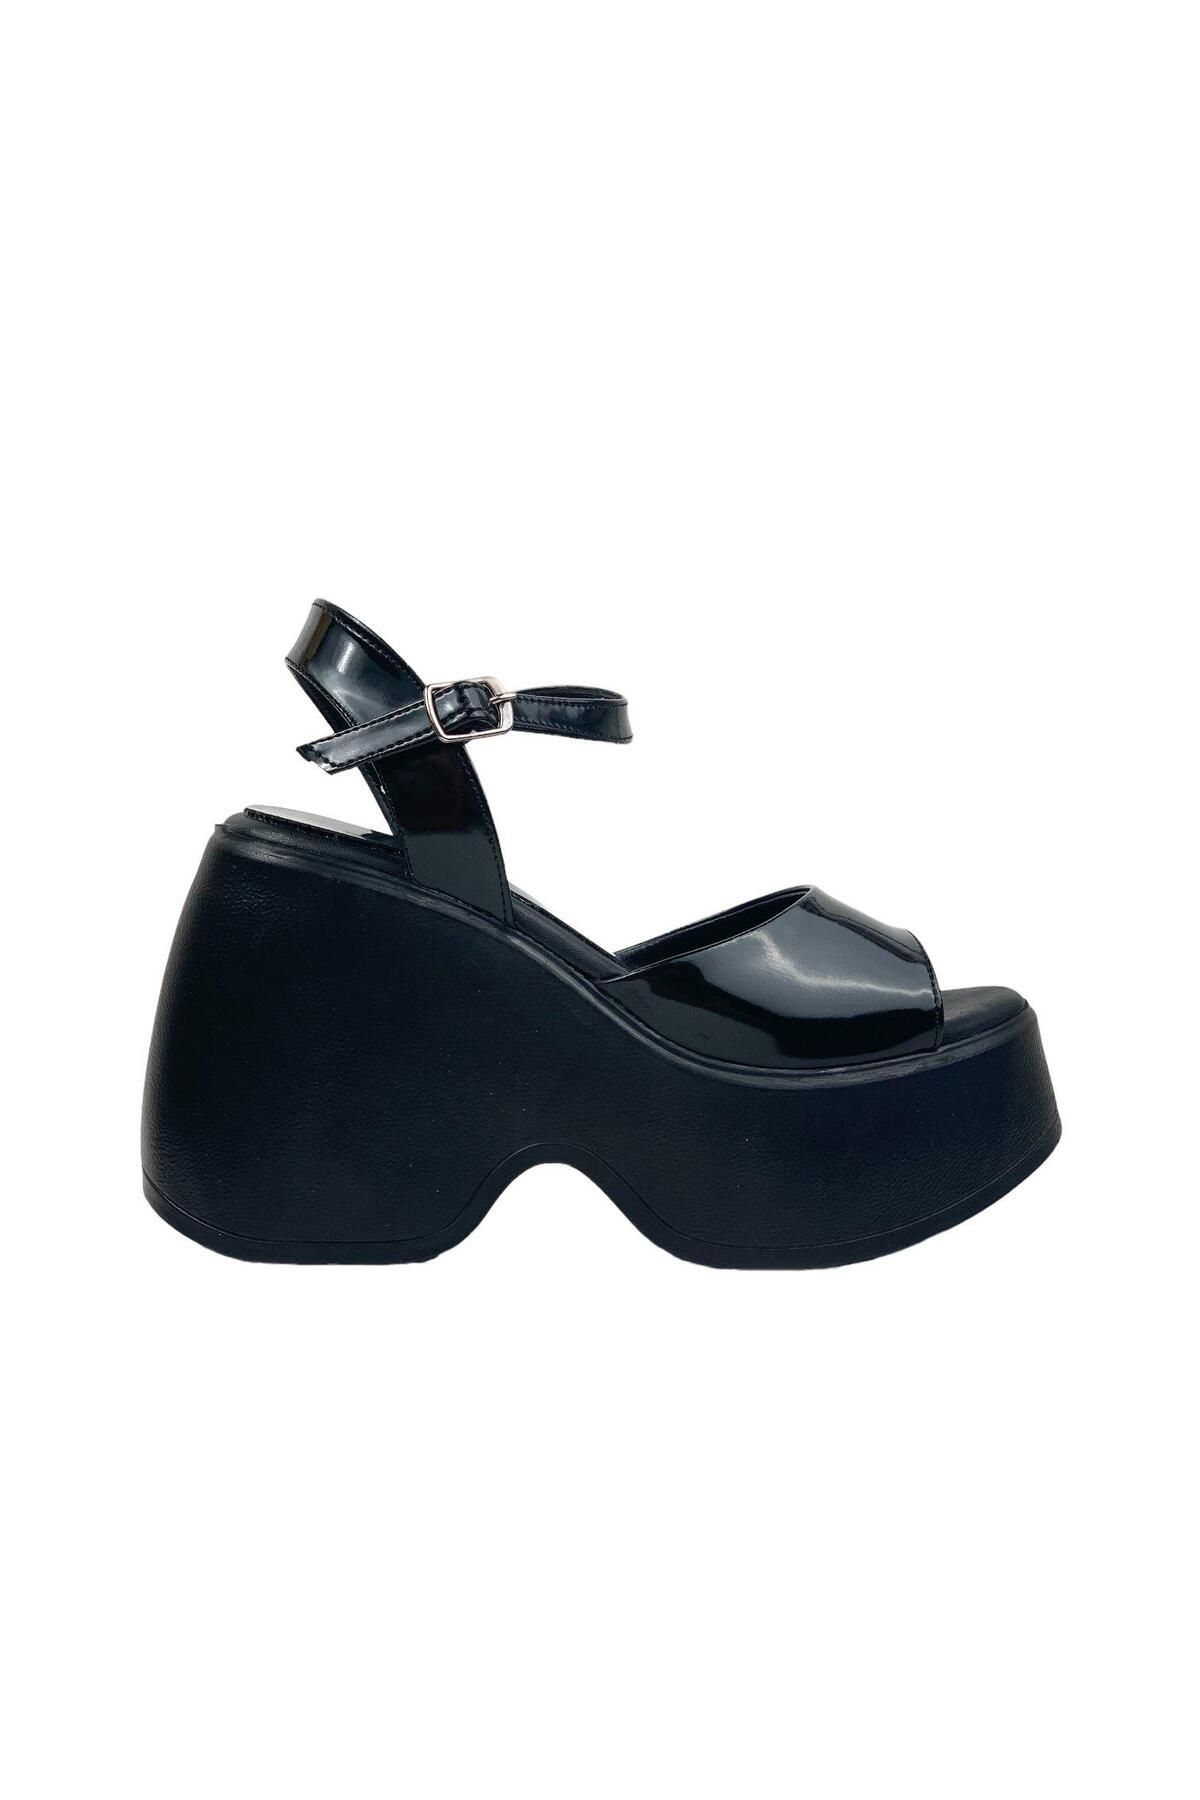 bescobel Kadın Fassa Siyah Rugan Platform Yüksek Taban Tek Bant Sandalet 10Cm dlg10